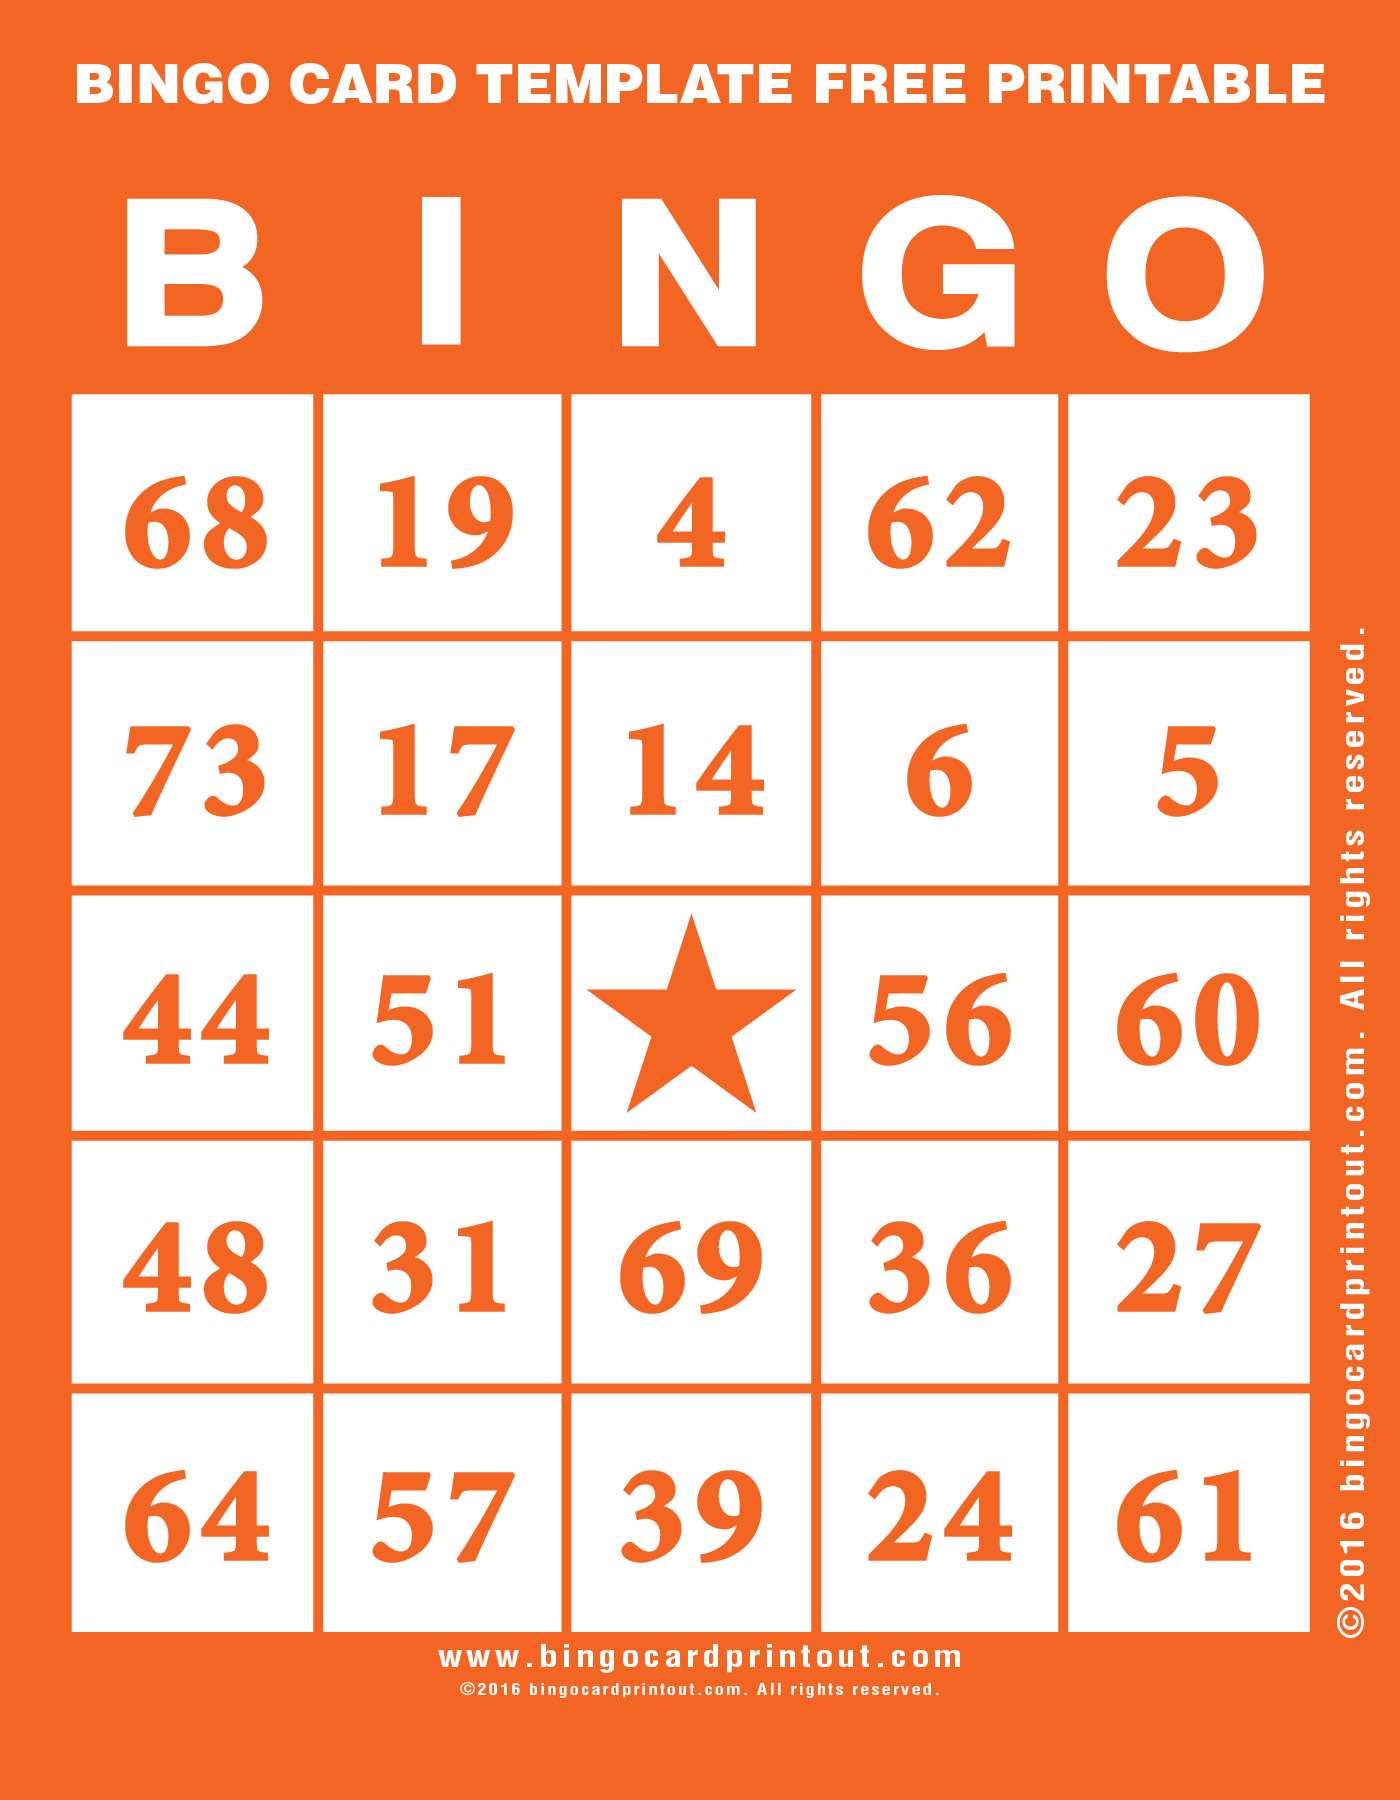 27 Creating Bingo Card Template To Print For Free with Bingo Card Template To Print